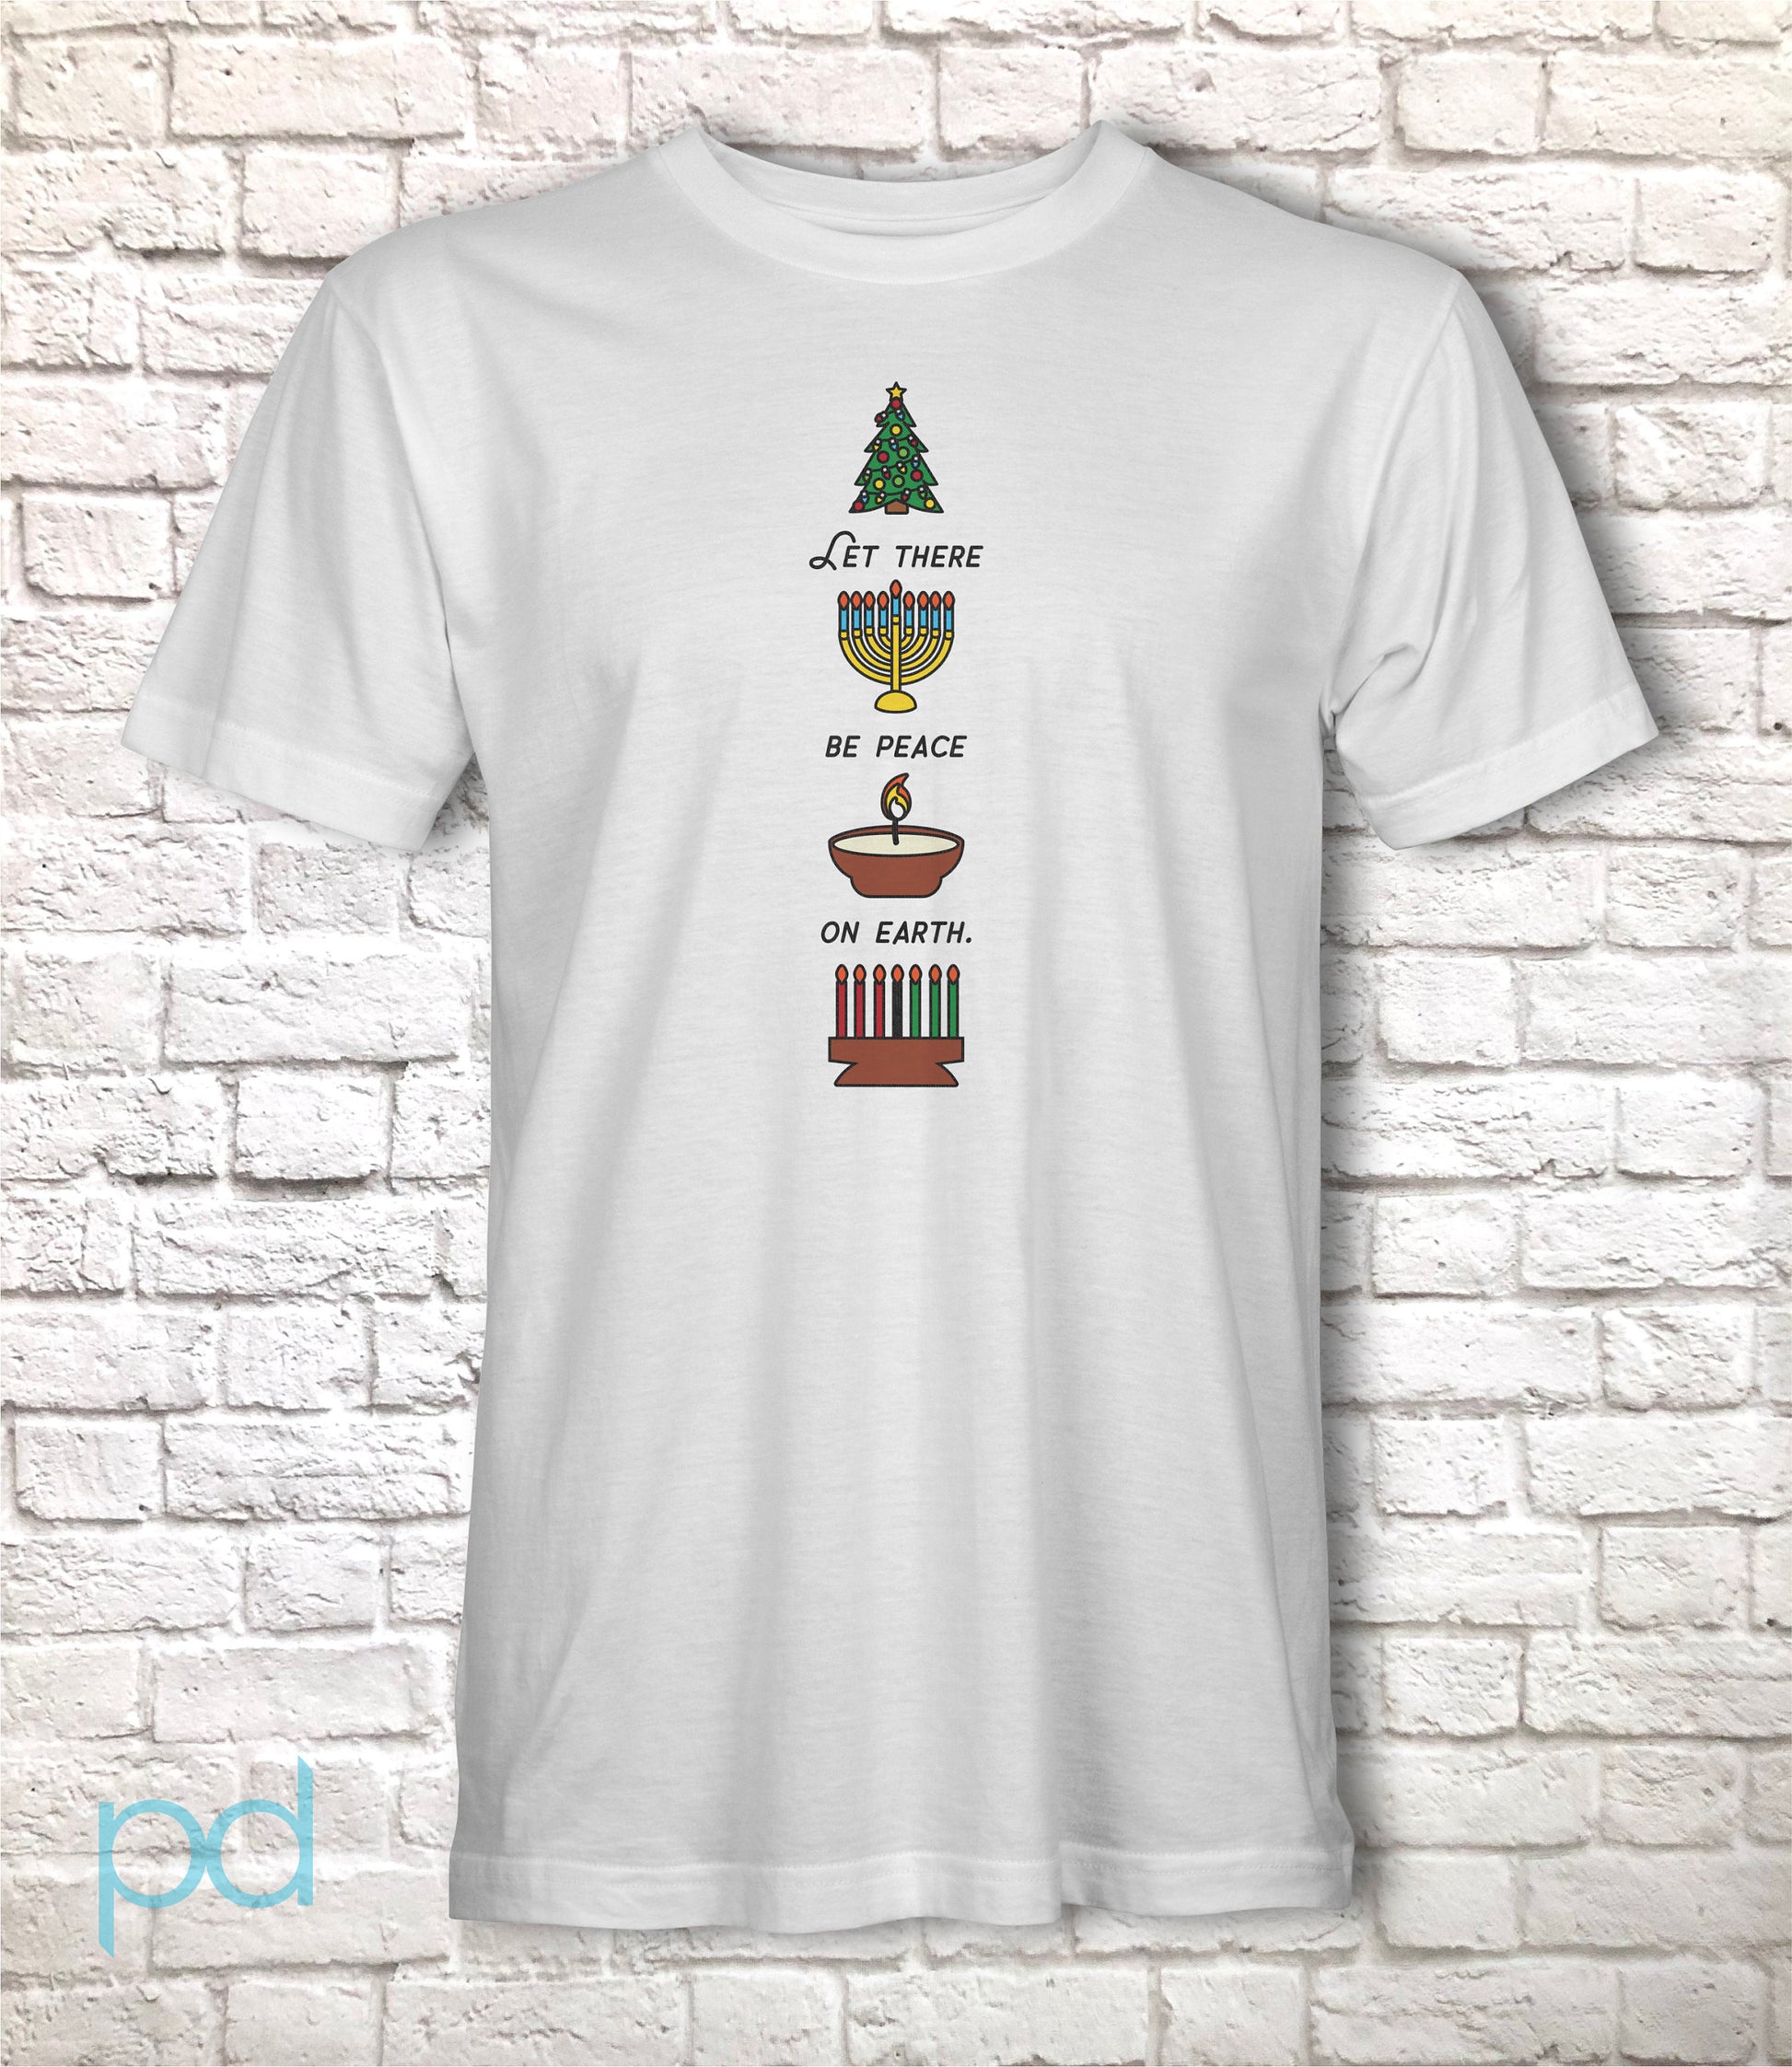 Multi-Cultural Seasonal T-Shirt, Xmas, Diwali, Kwanzaa Gift Idea, &#39;Let There Be Peace on Earth&#39; Graphic Tee Shirt Top